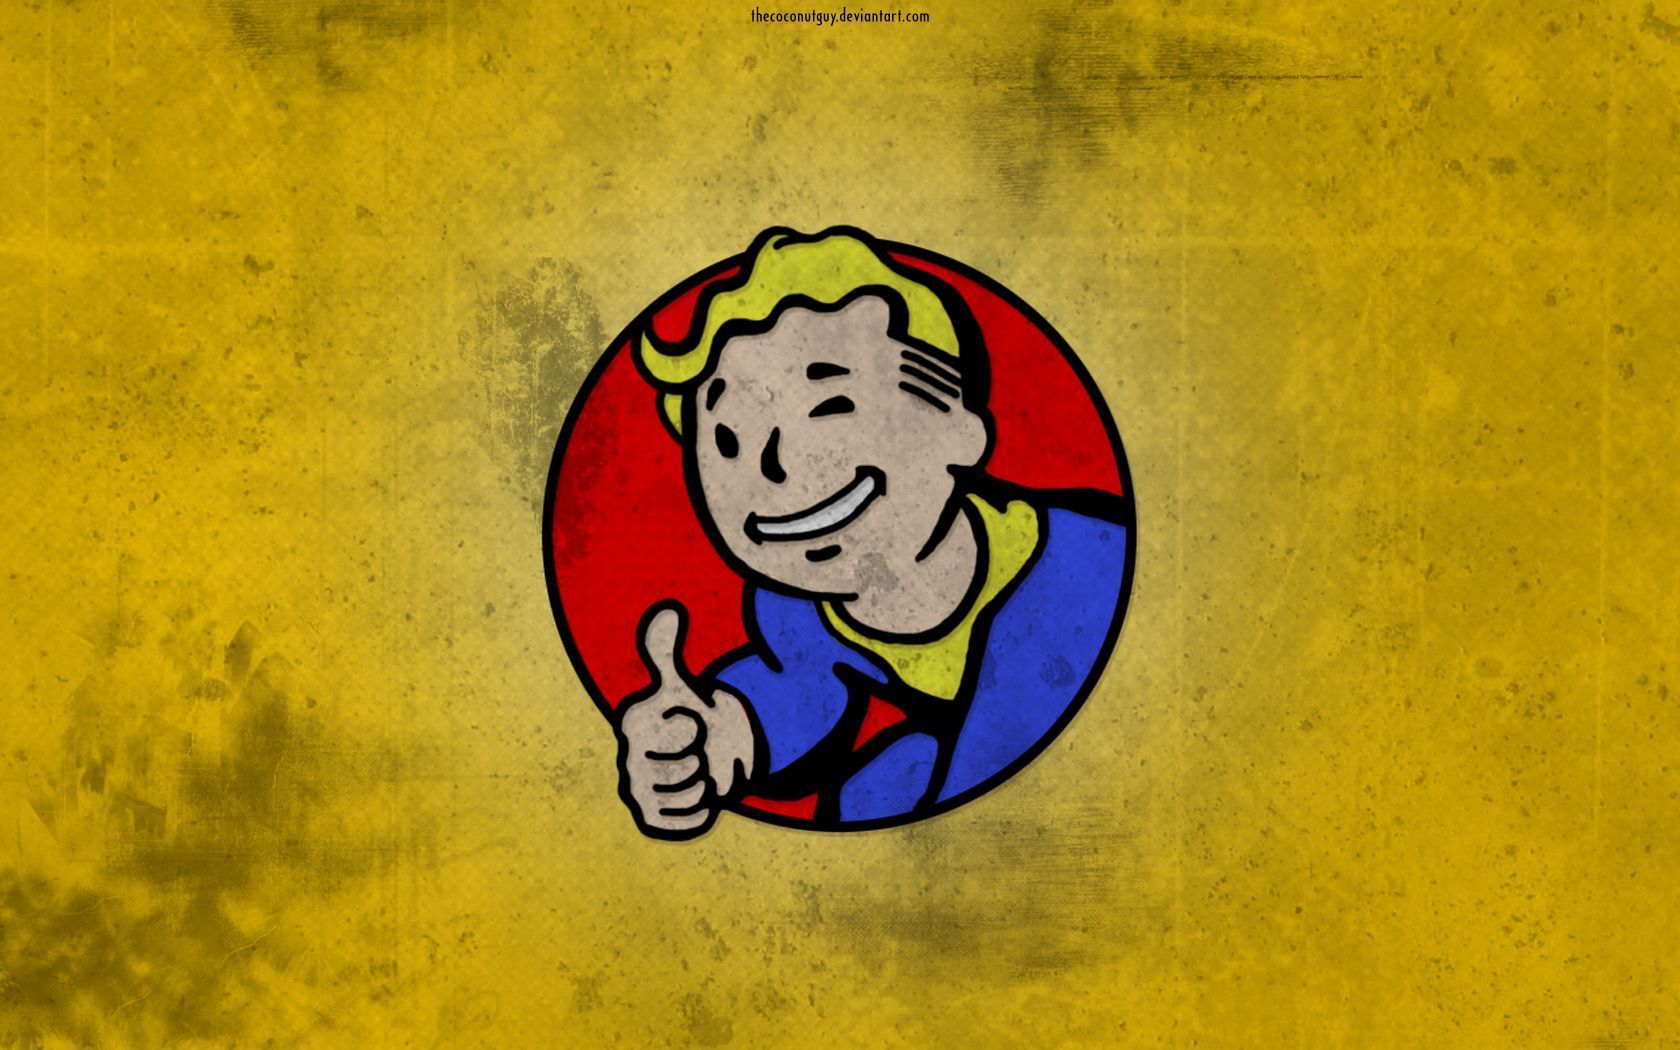 Top Fallout Vault Boy Wallpaper Iphone Images for Pinterest